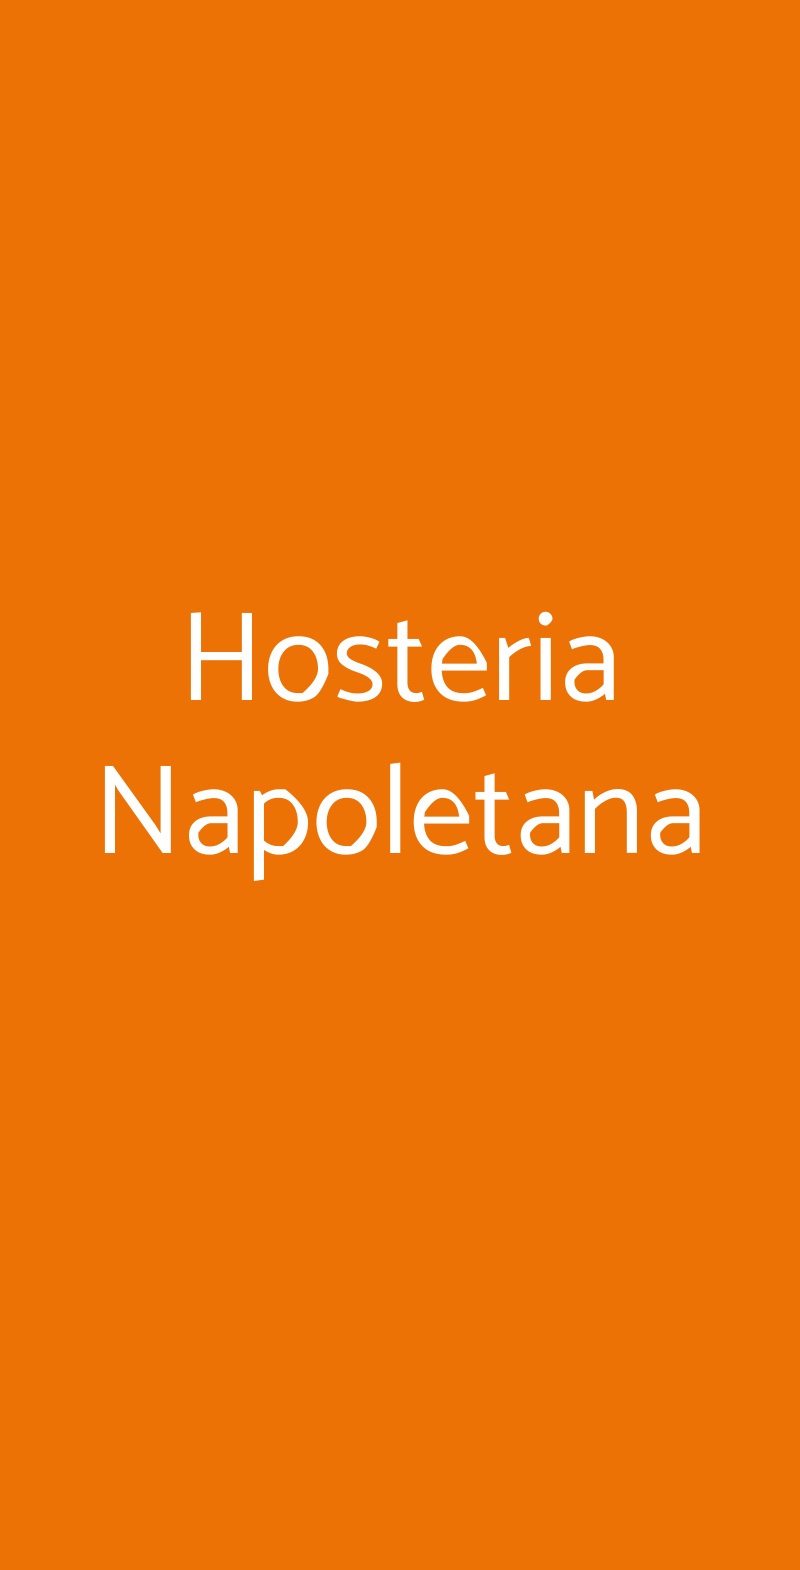 Hosteria Napoletana Napoli menù 1 pagina